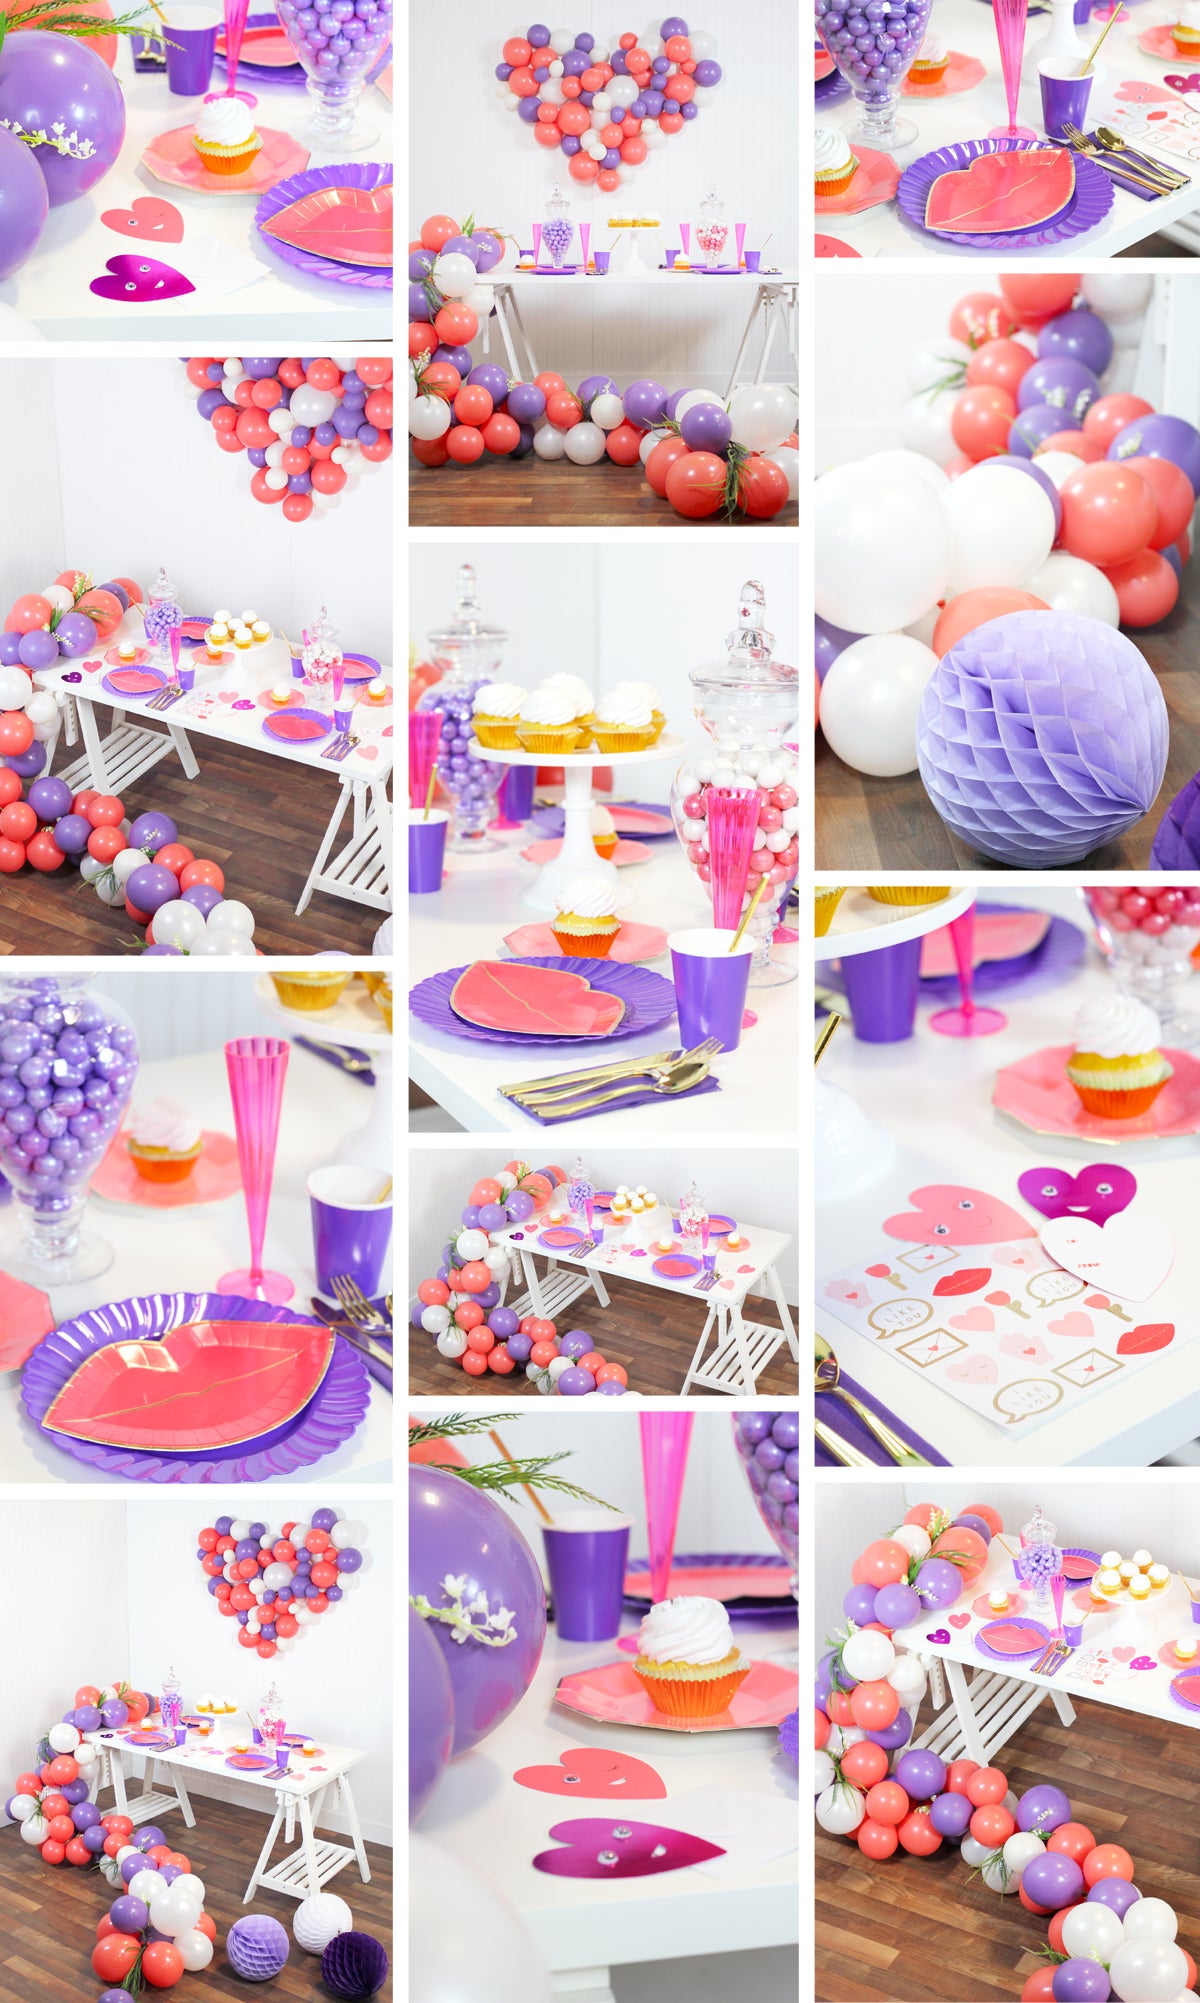 Galentine's Valentine's Day party ideas